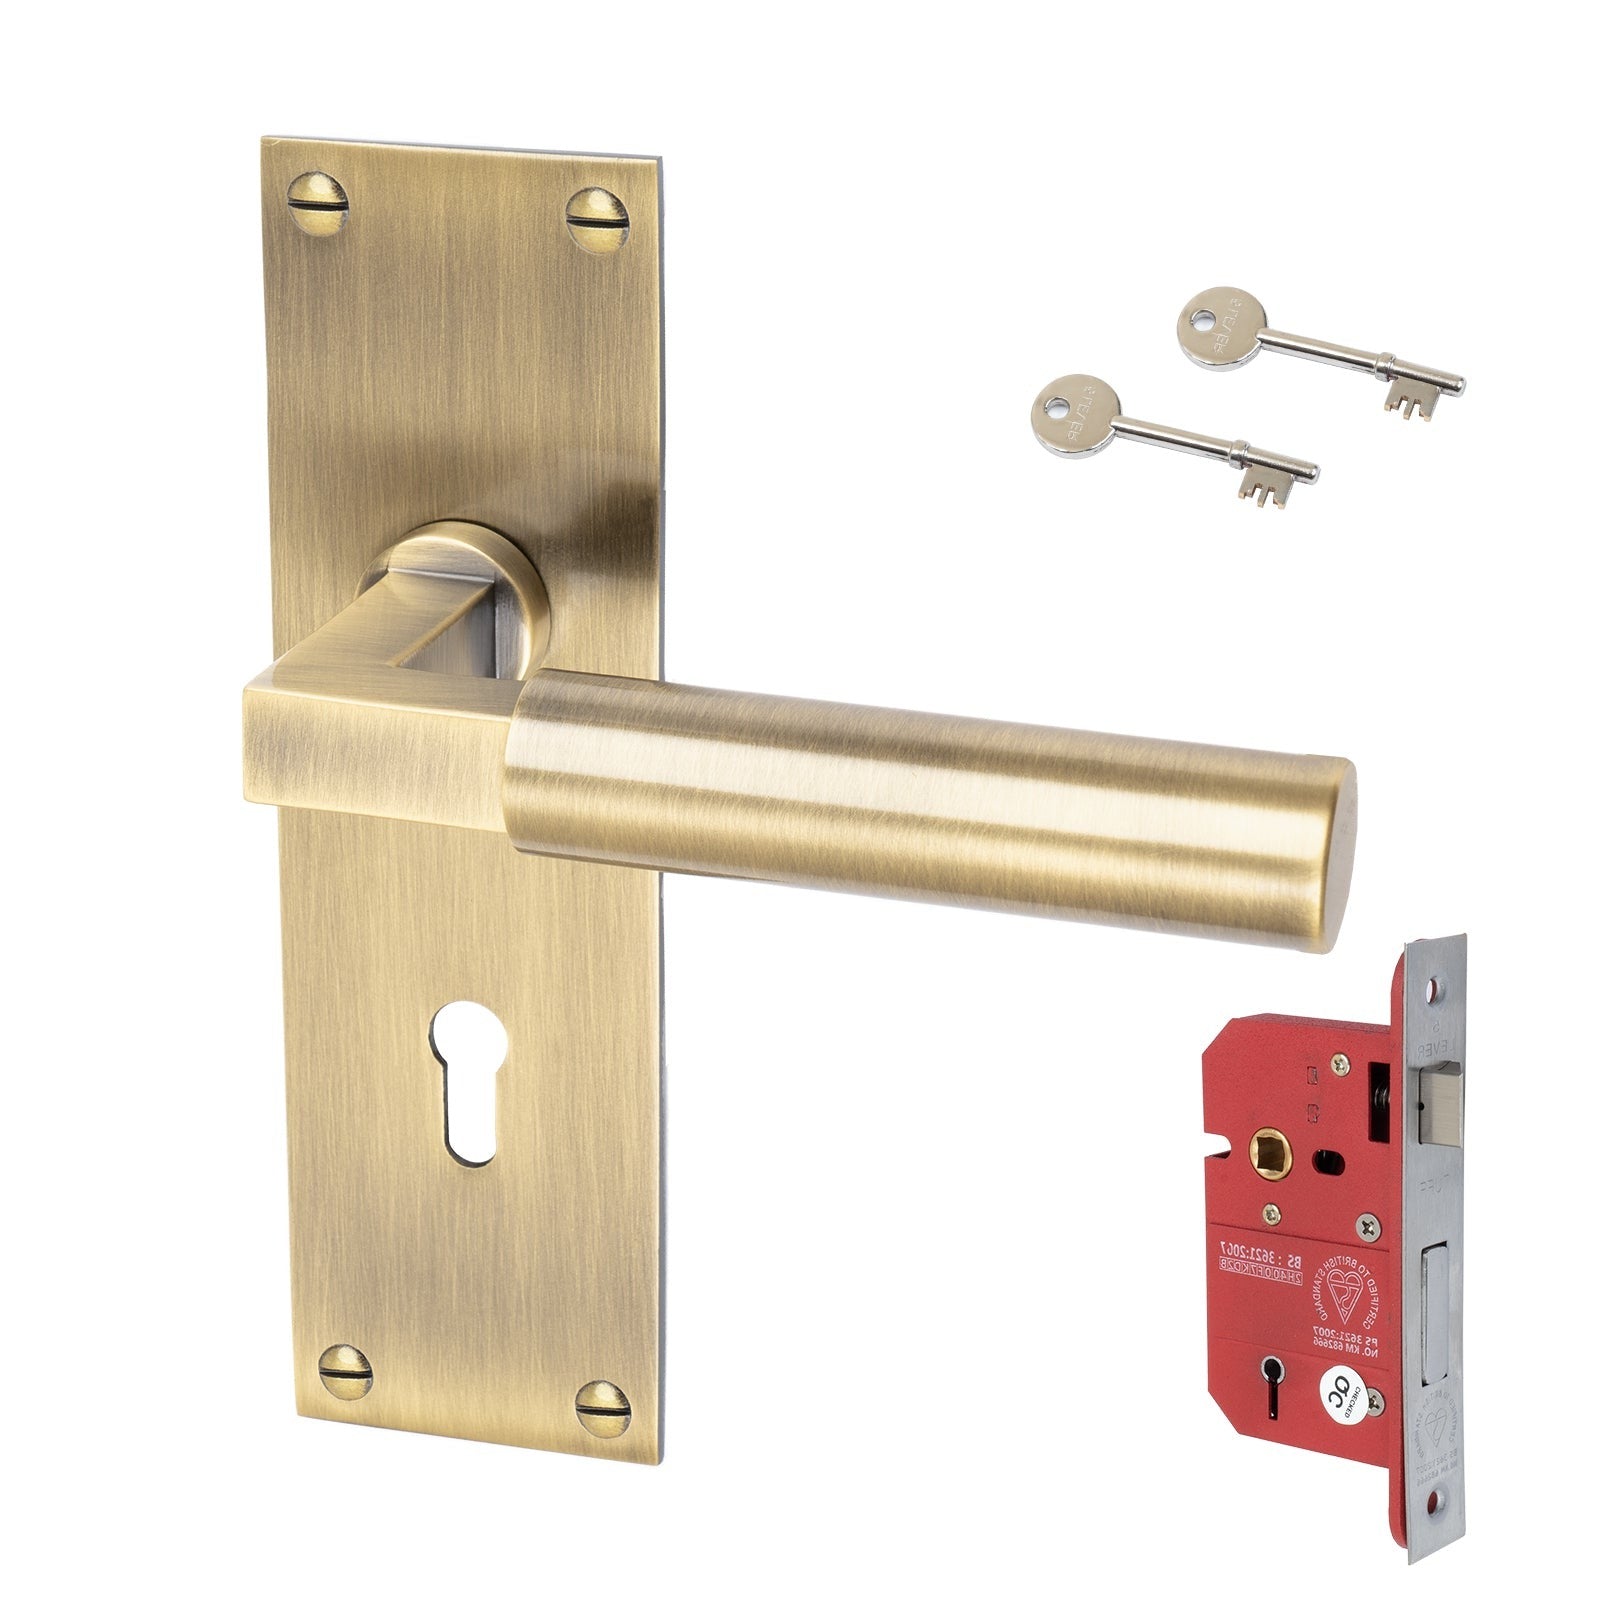 Bauhaus Door Handles On Plate 5 Lever Lock Handle Set in Aged Brass